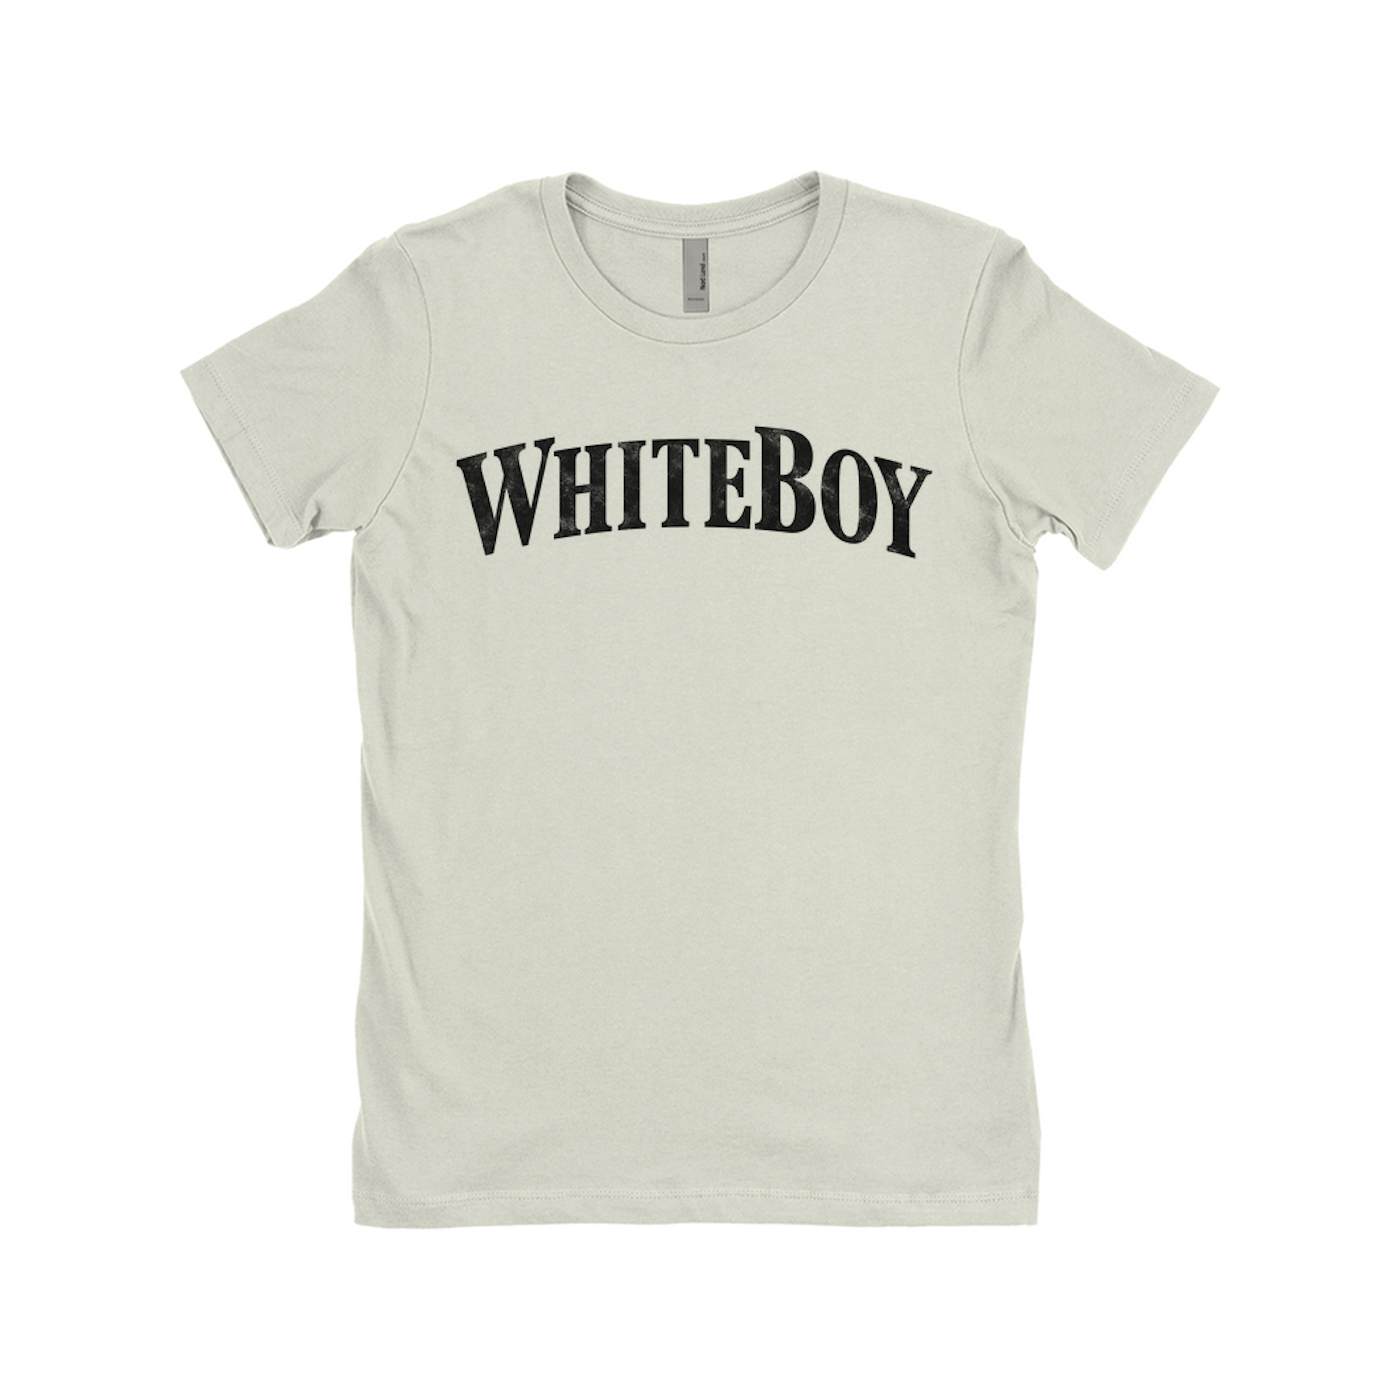 Mötley Crüe Ladies' Boyfriend T-Shirt | White Boy Worn By Tommy Lee Mötley Crüe Shirt